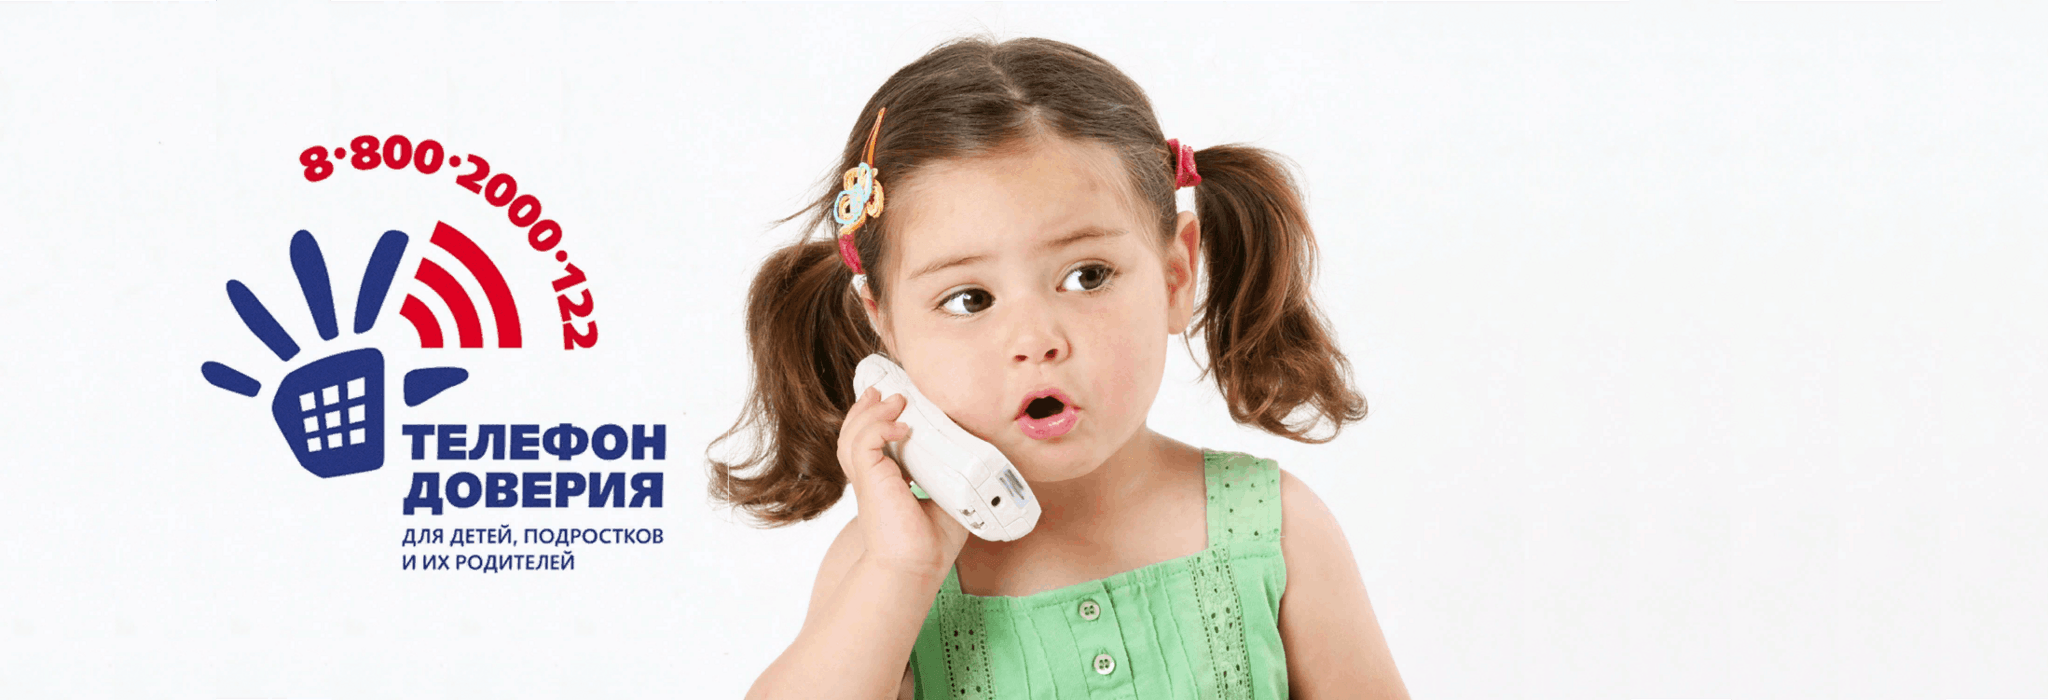 Телефон доверия звонок. Телефон доверия. Детский телефон доверия. Телефон довен. Телефон довенри.